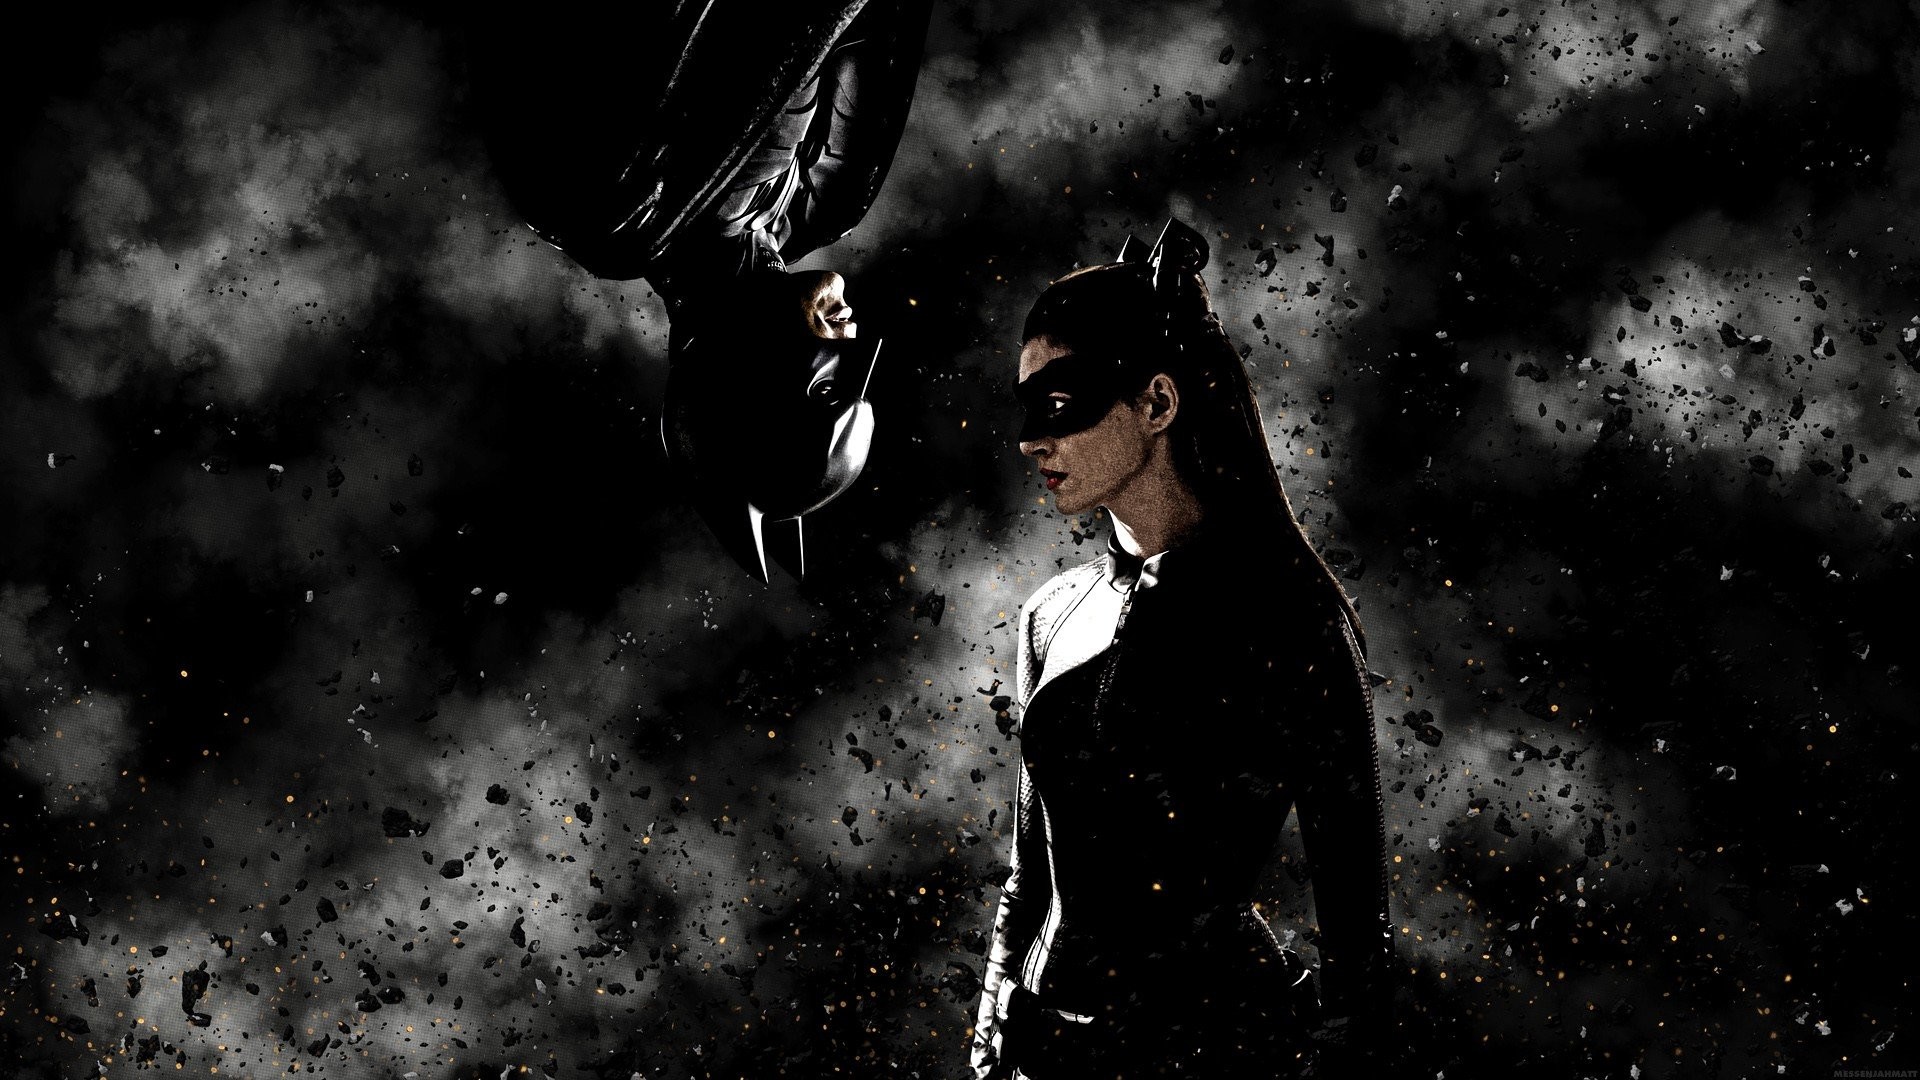 Best 25 Dark knight wallpaper ideas on Pinterest Batman comic wallpaper, Batman and Batman art